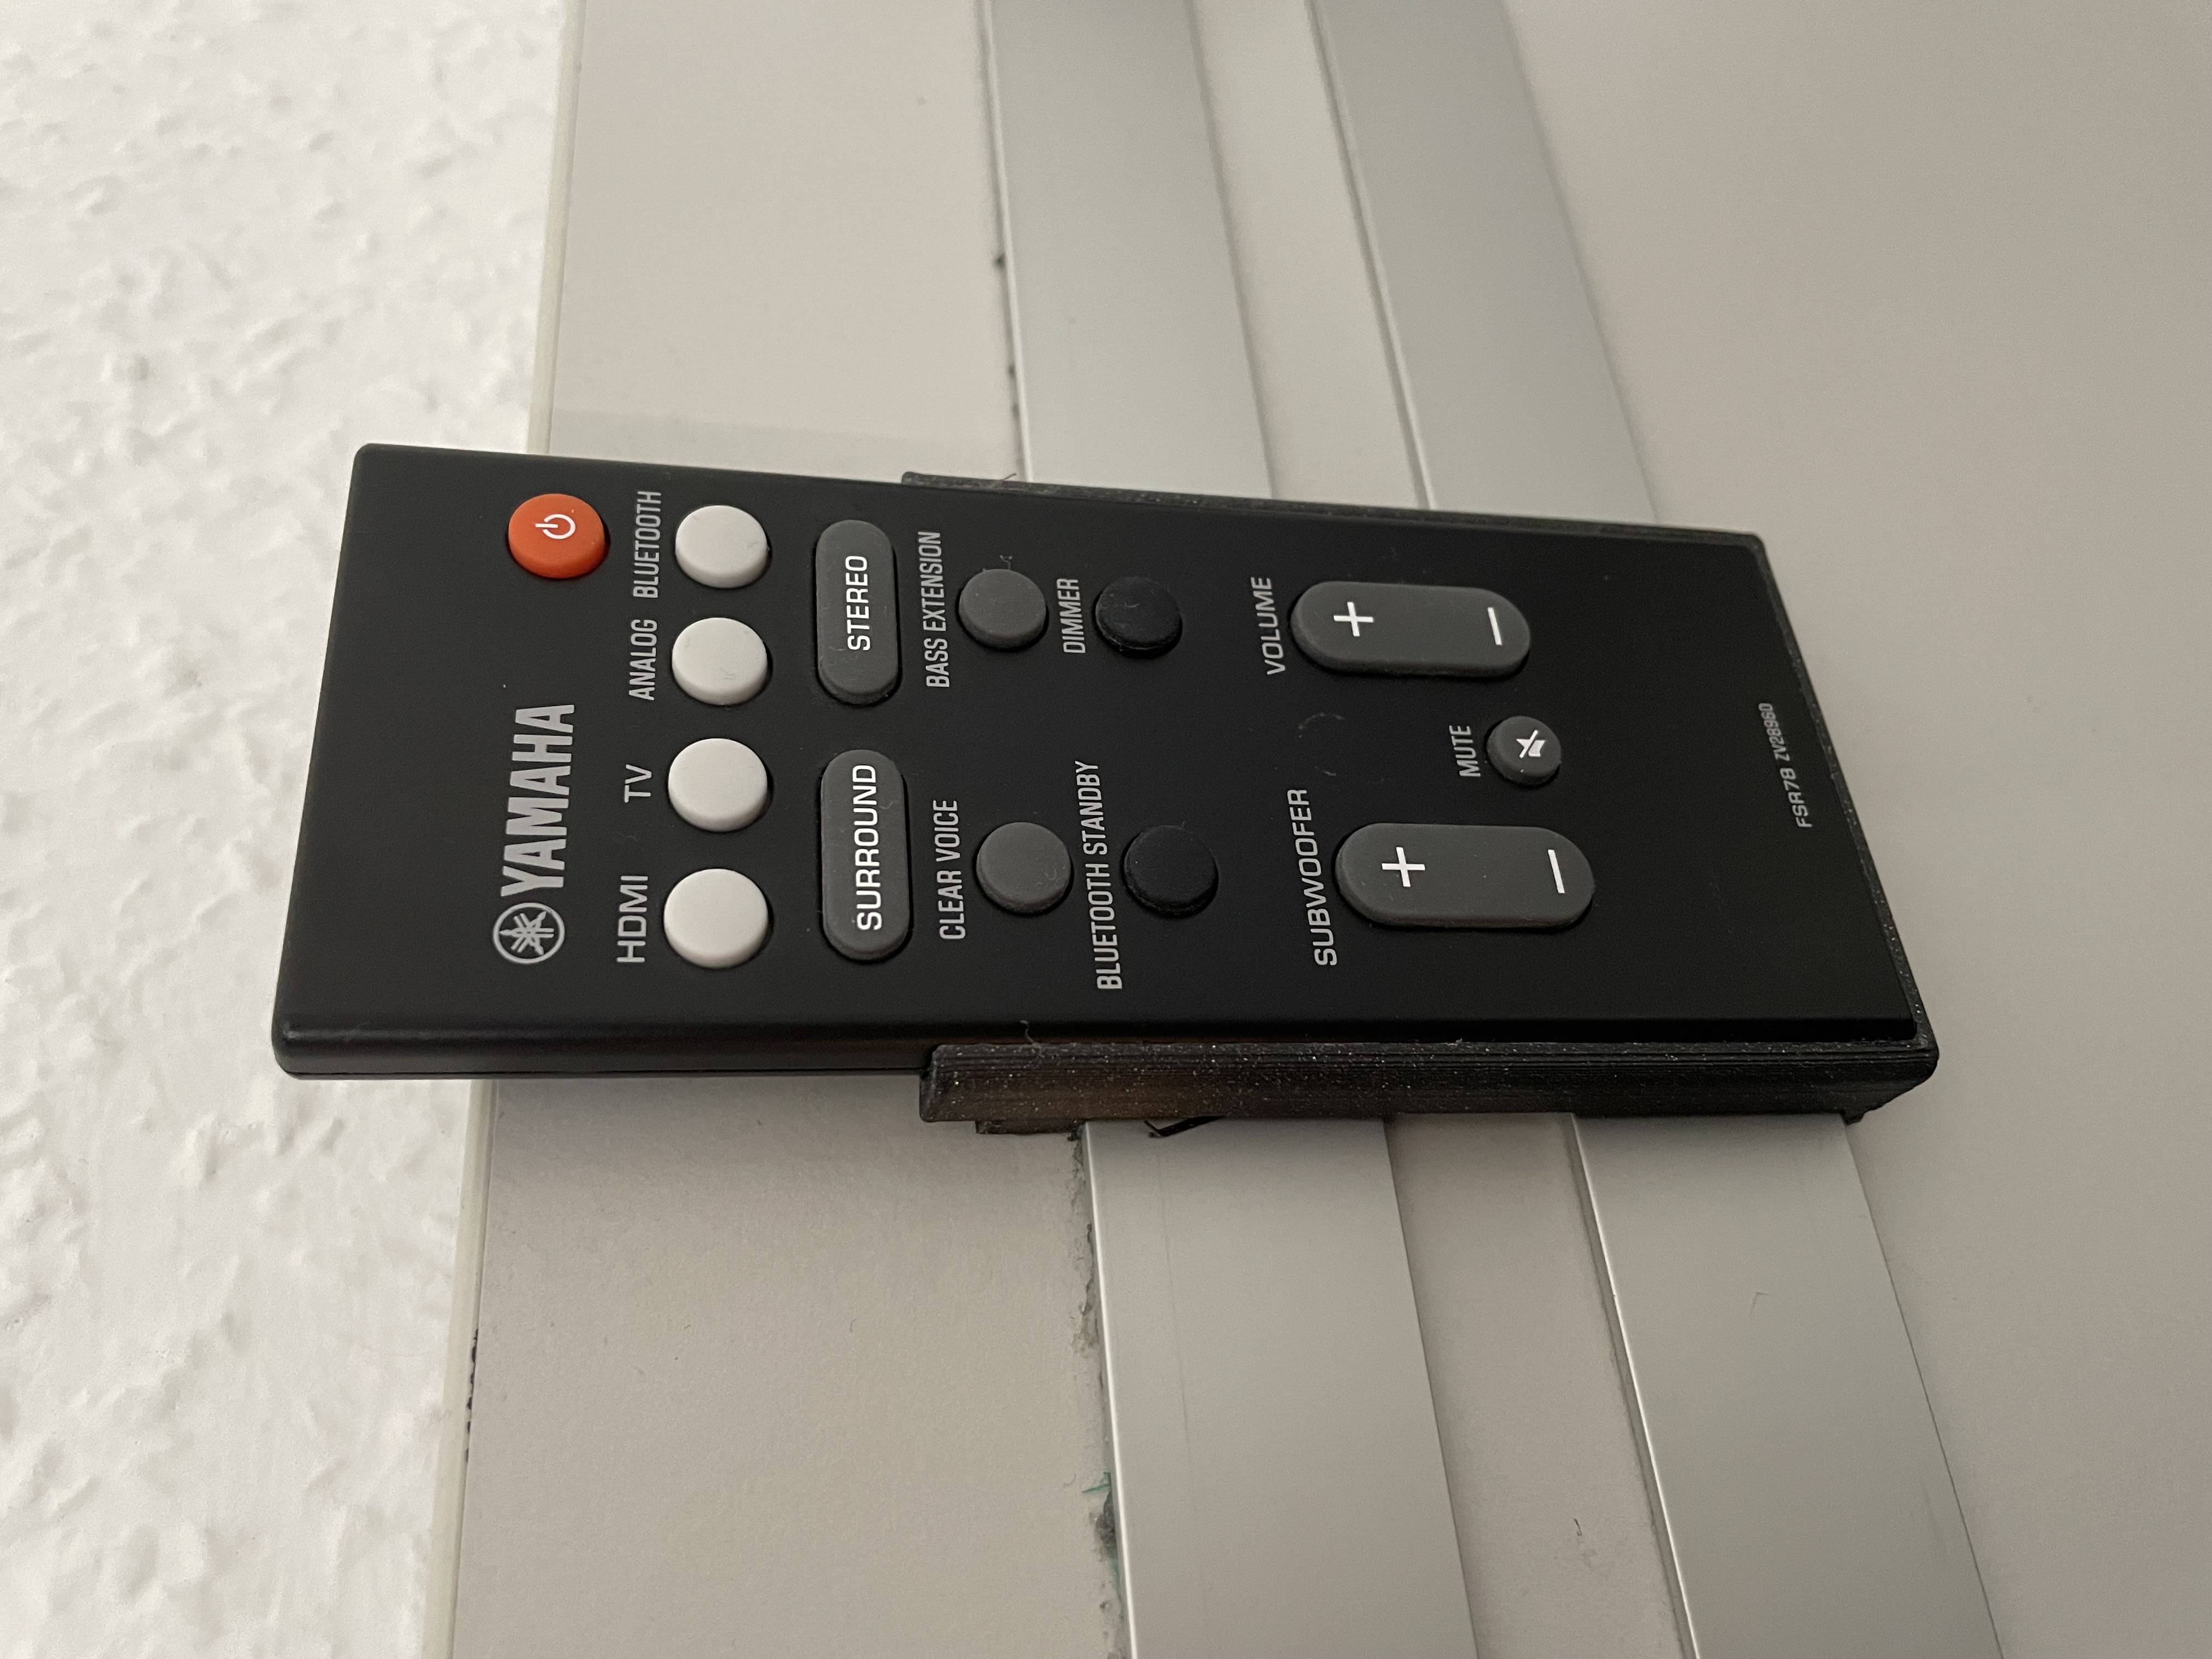 Yamaha soundbar remote control mounting fixture